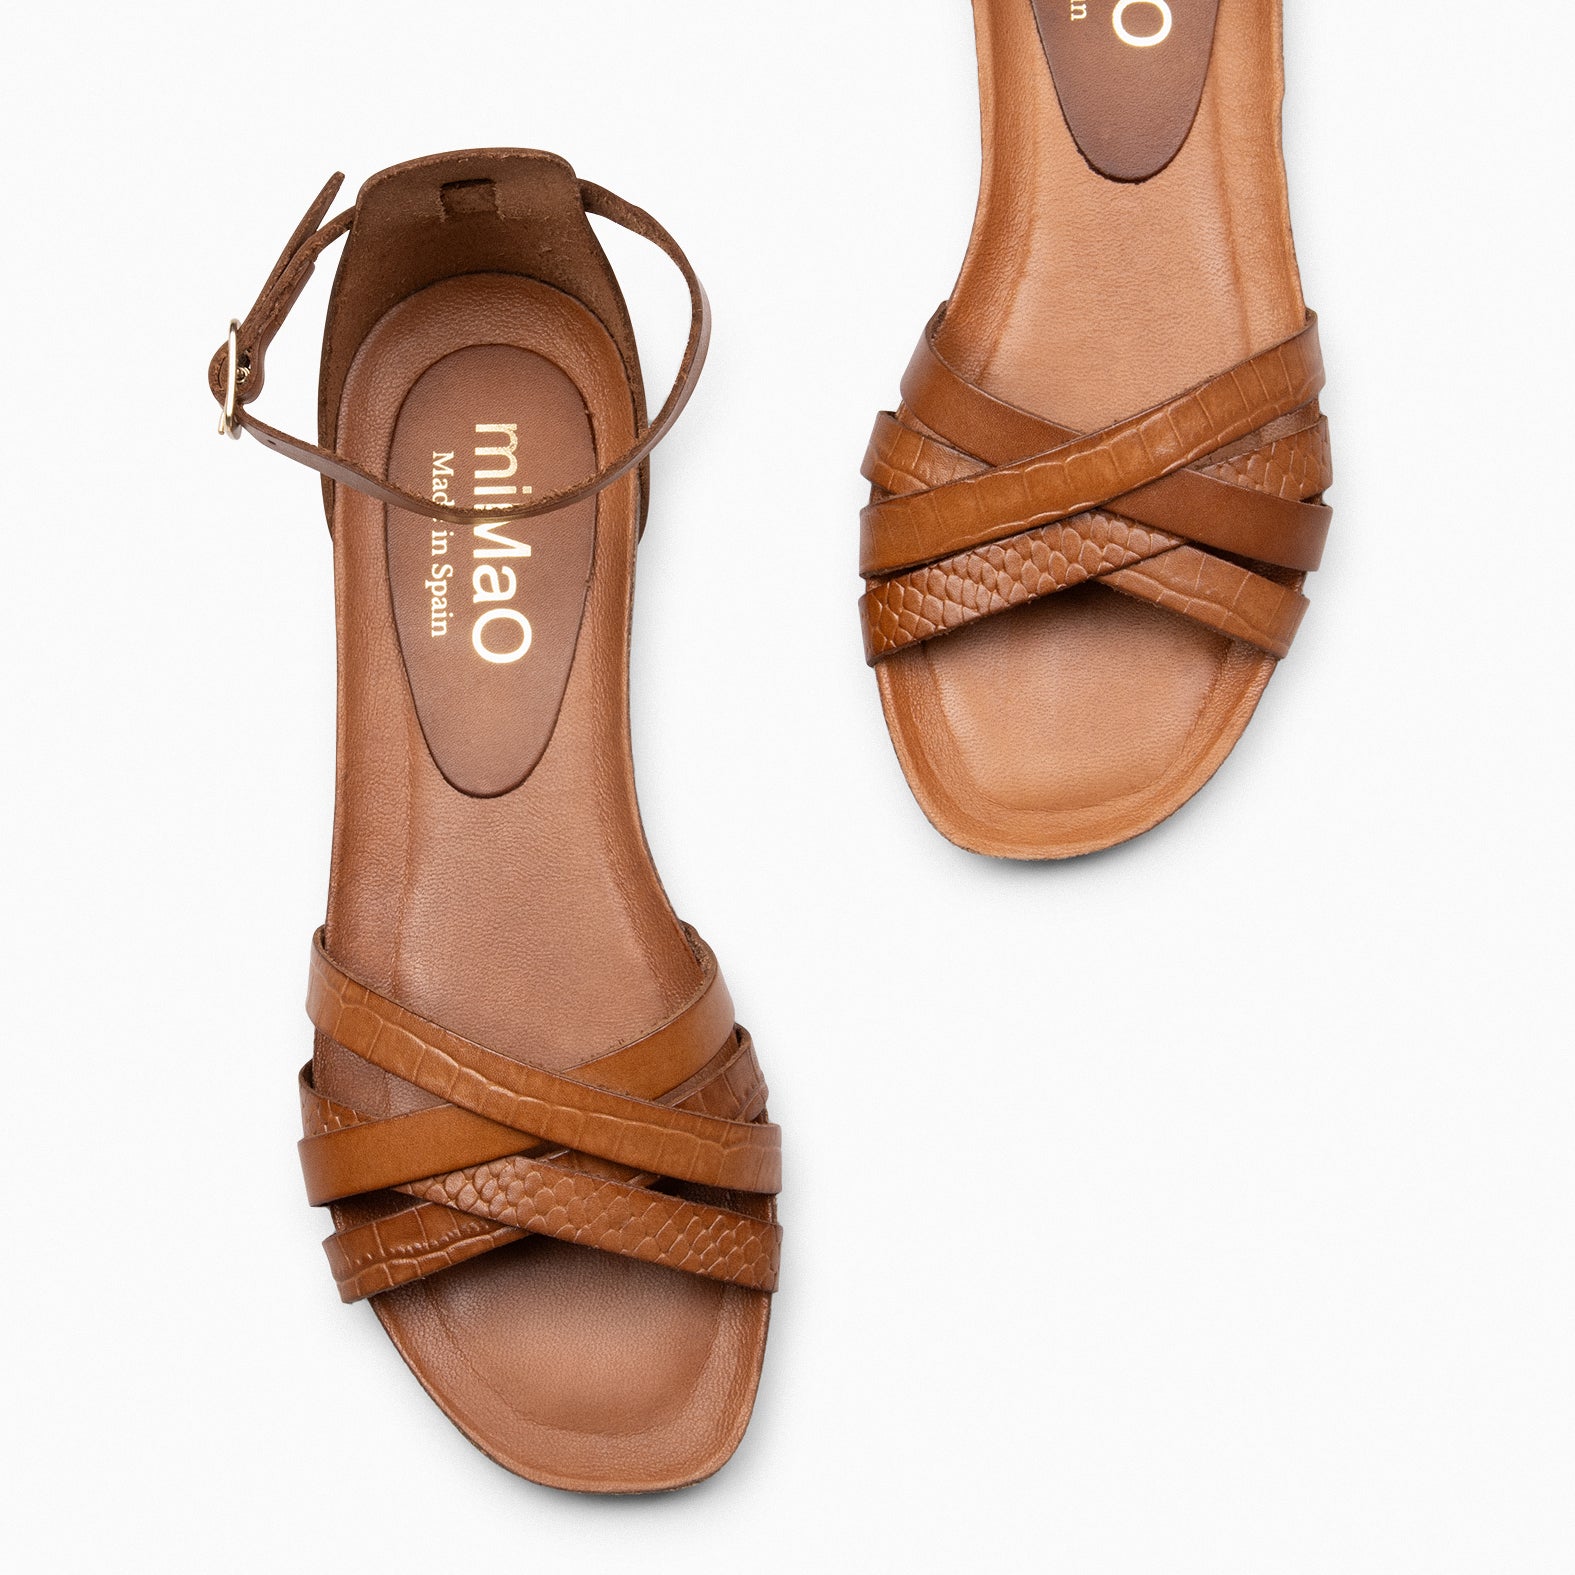 CRISSAL – LEATHER Flat Sandals